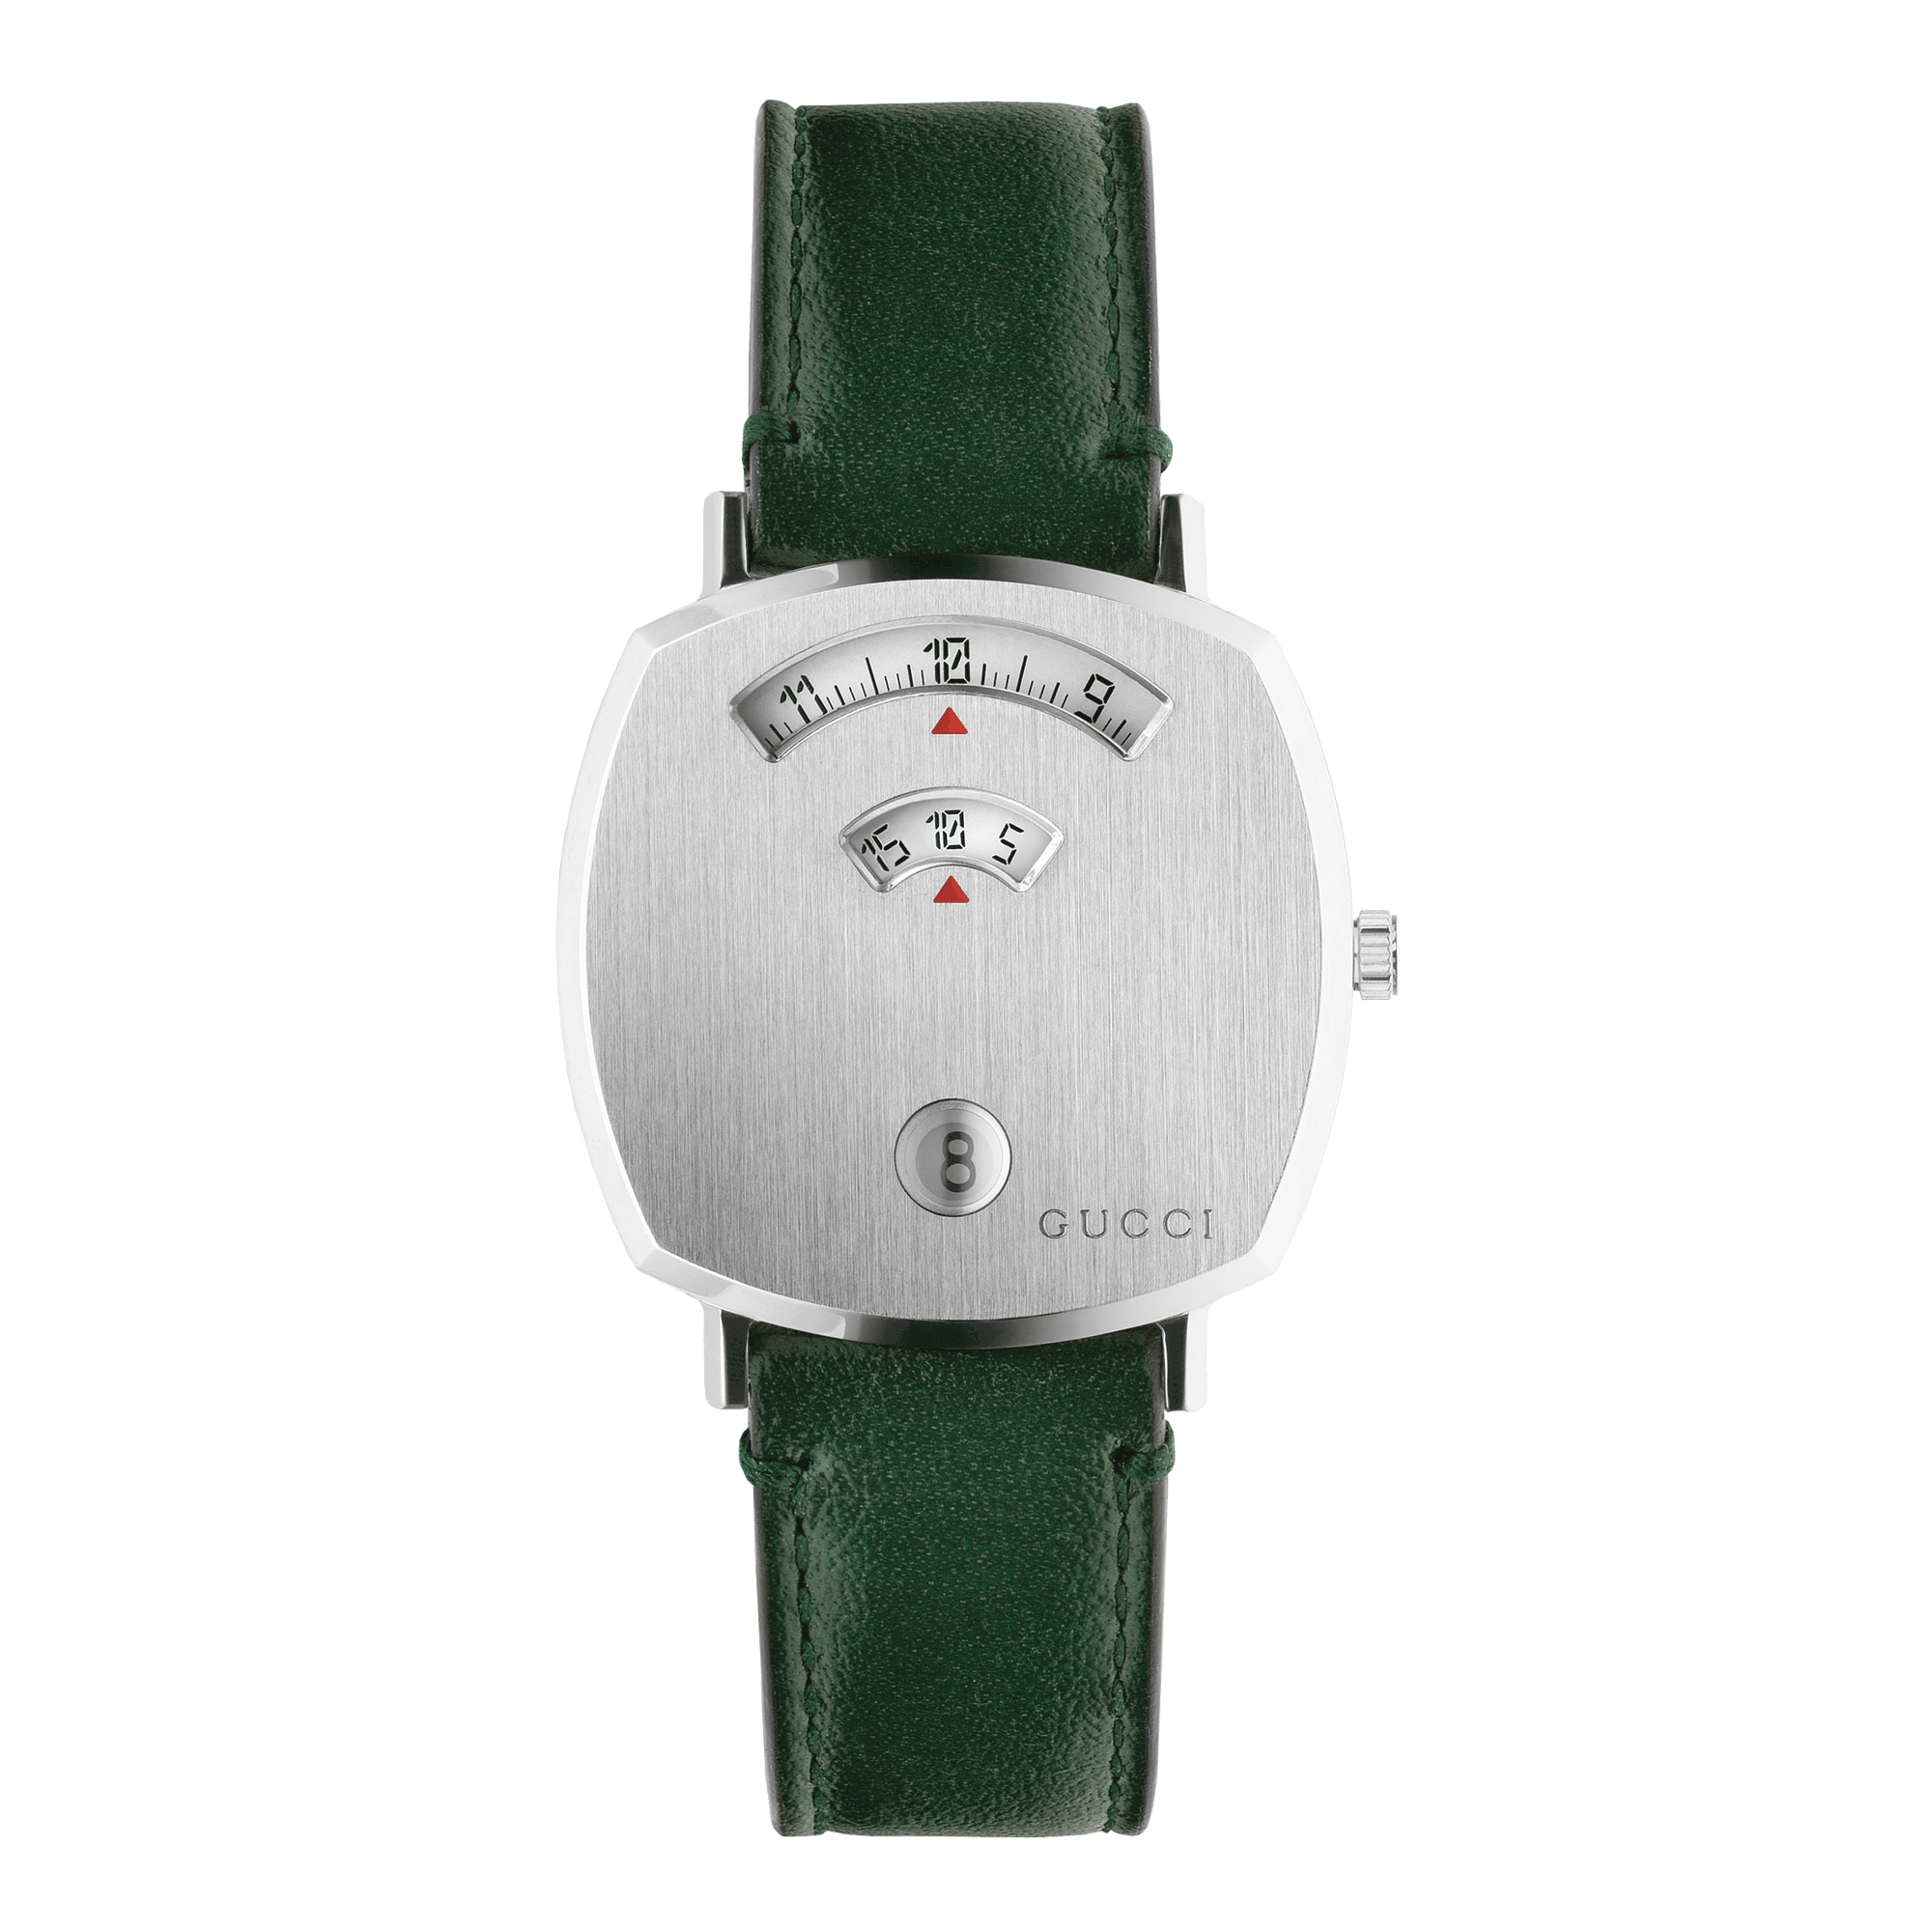 Gucci Grip watch 35mm - Fecarotta Gioielli